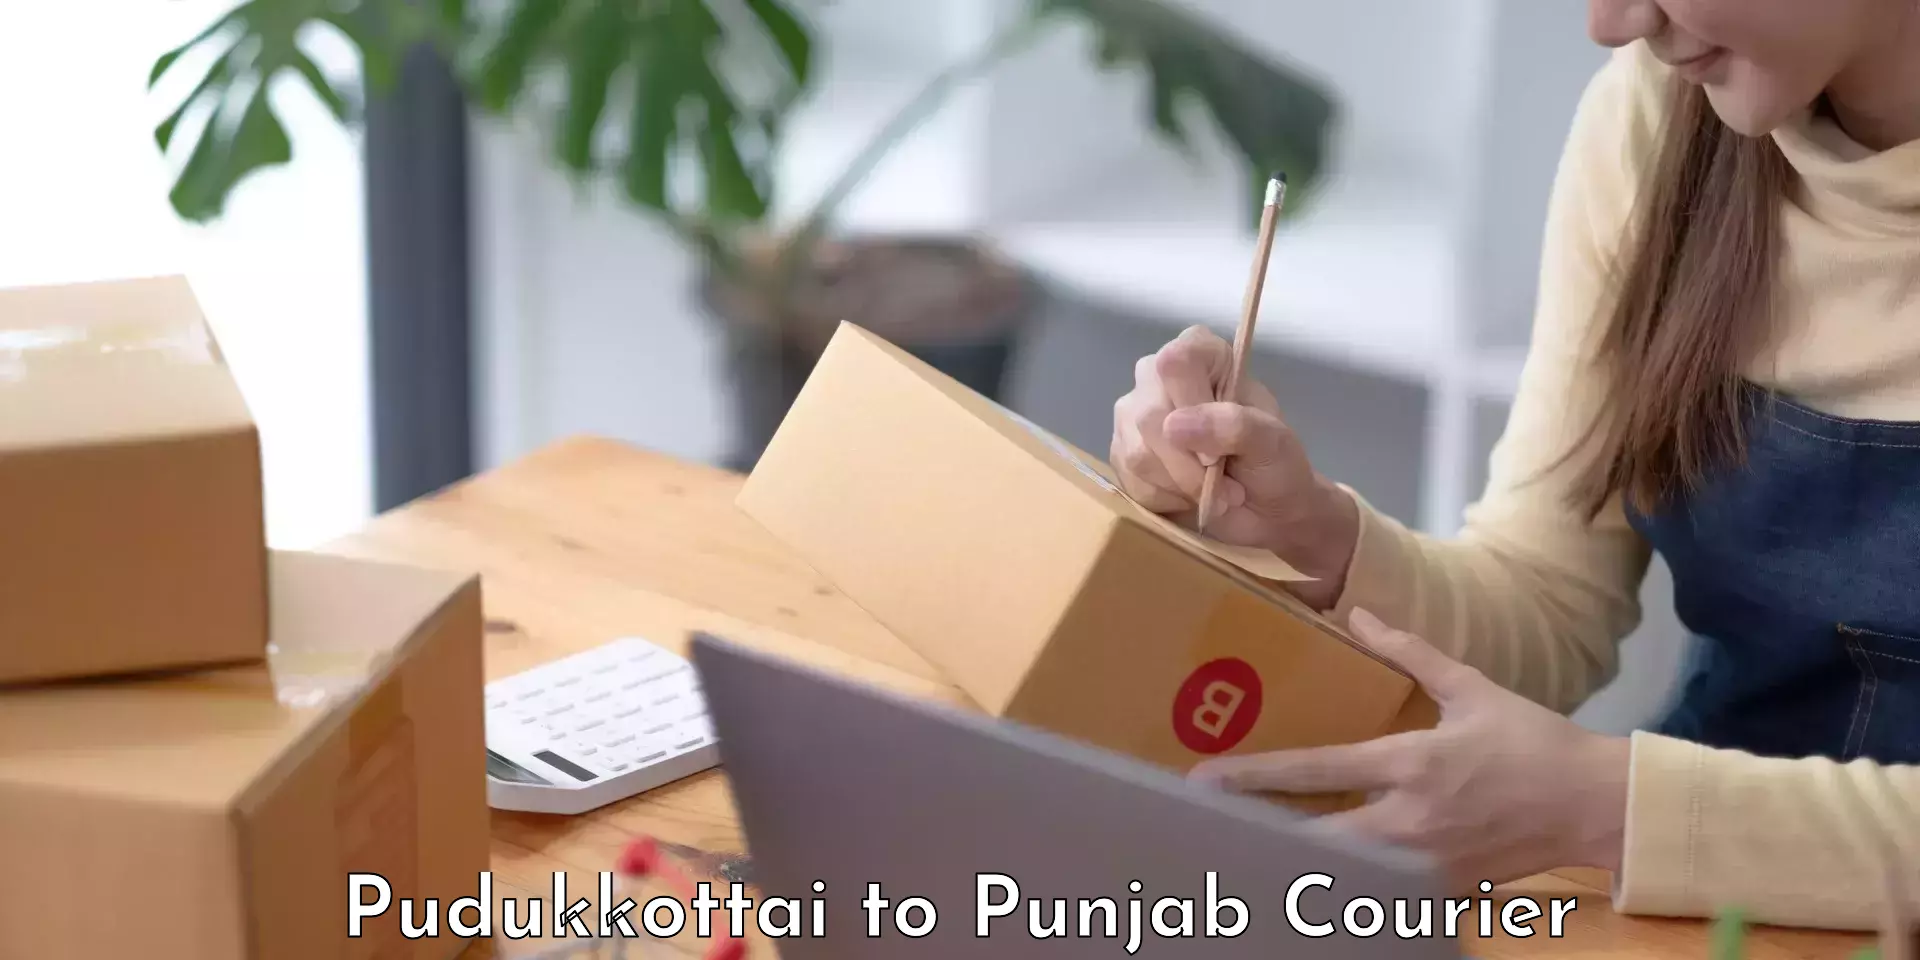 Professional moving company Pudukkottai to Punjab